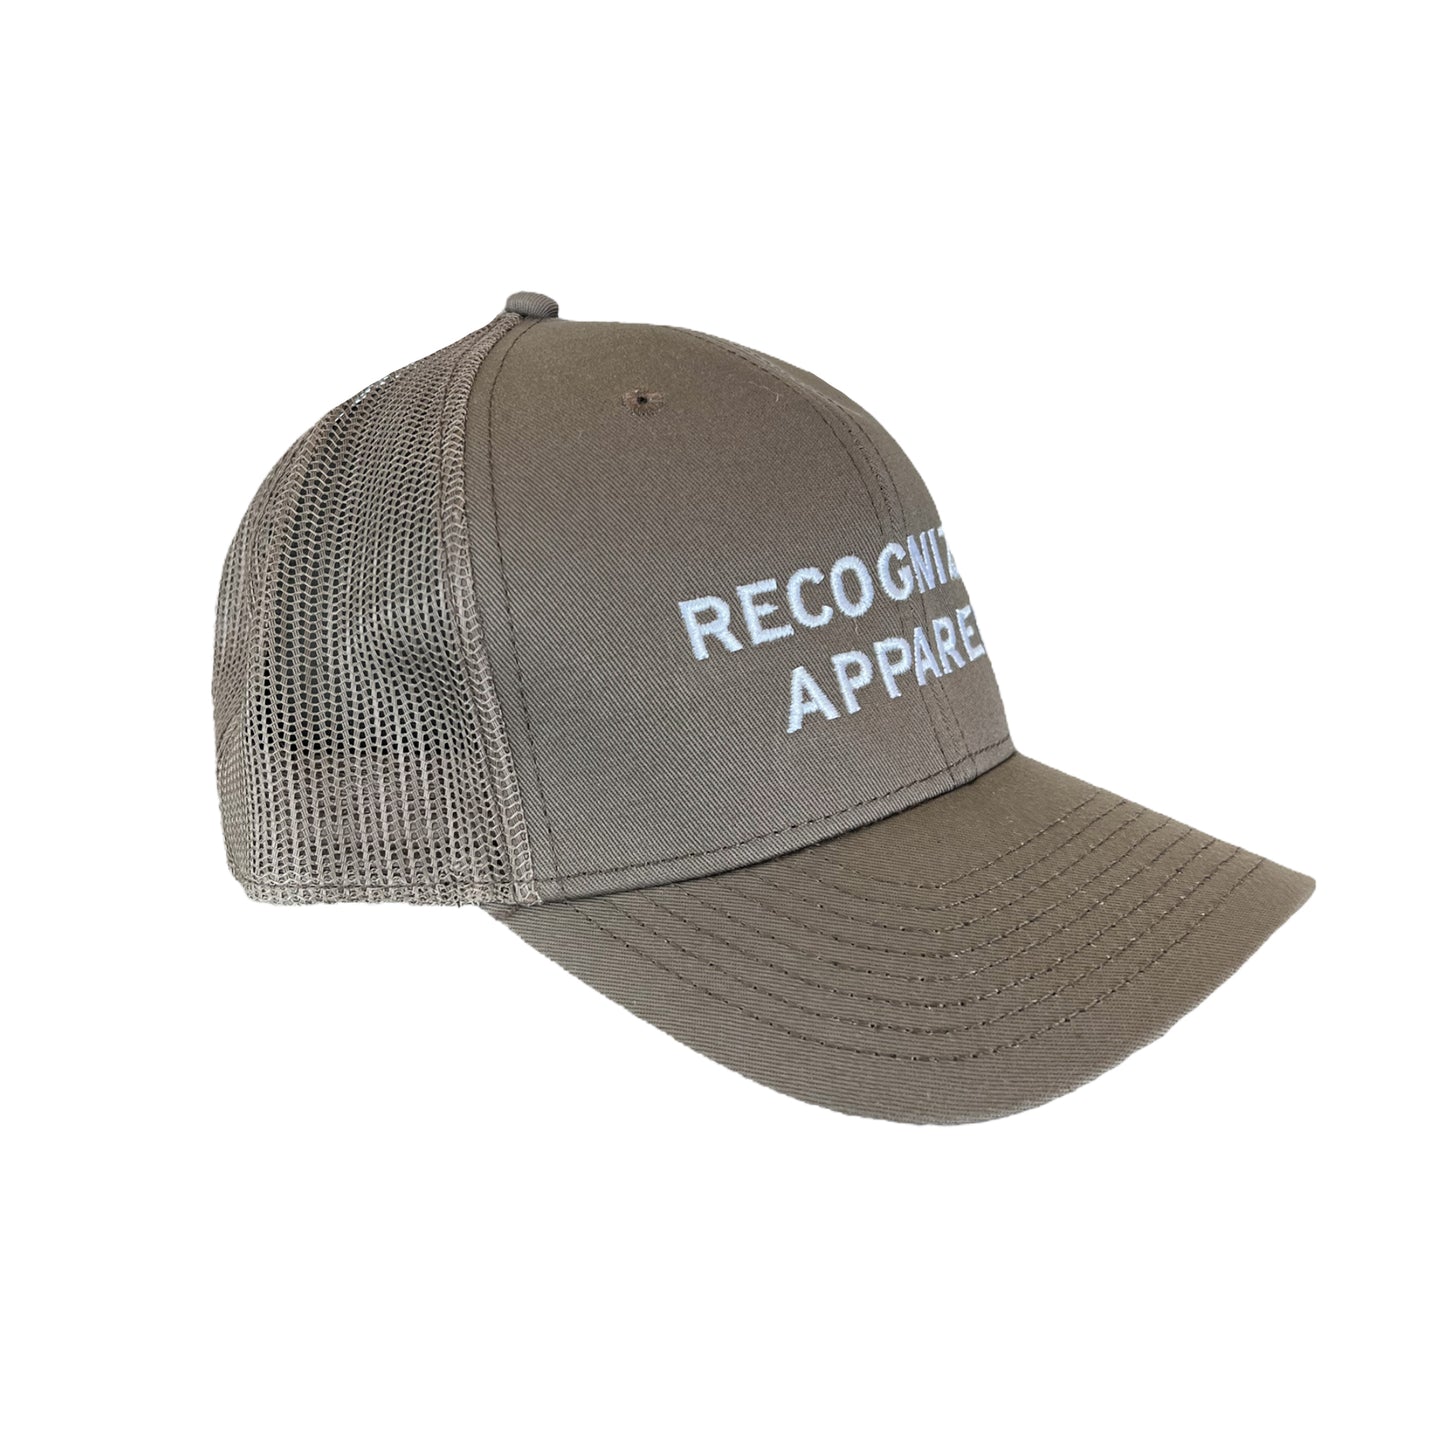 Recognized Apparel® Trucker Cap